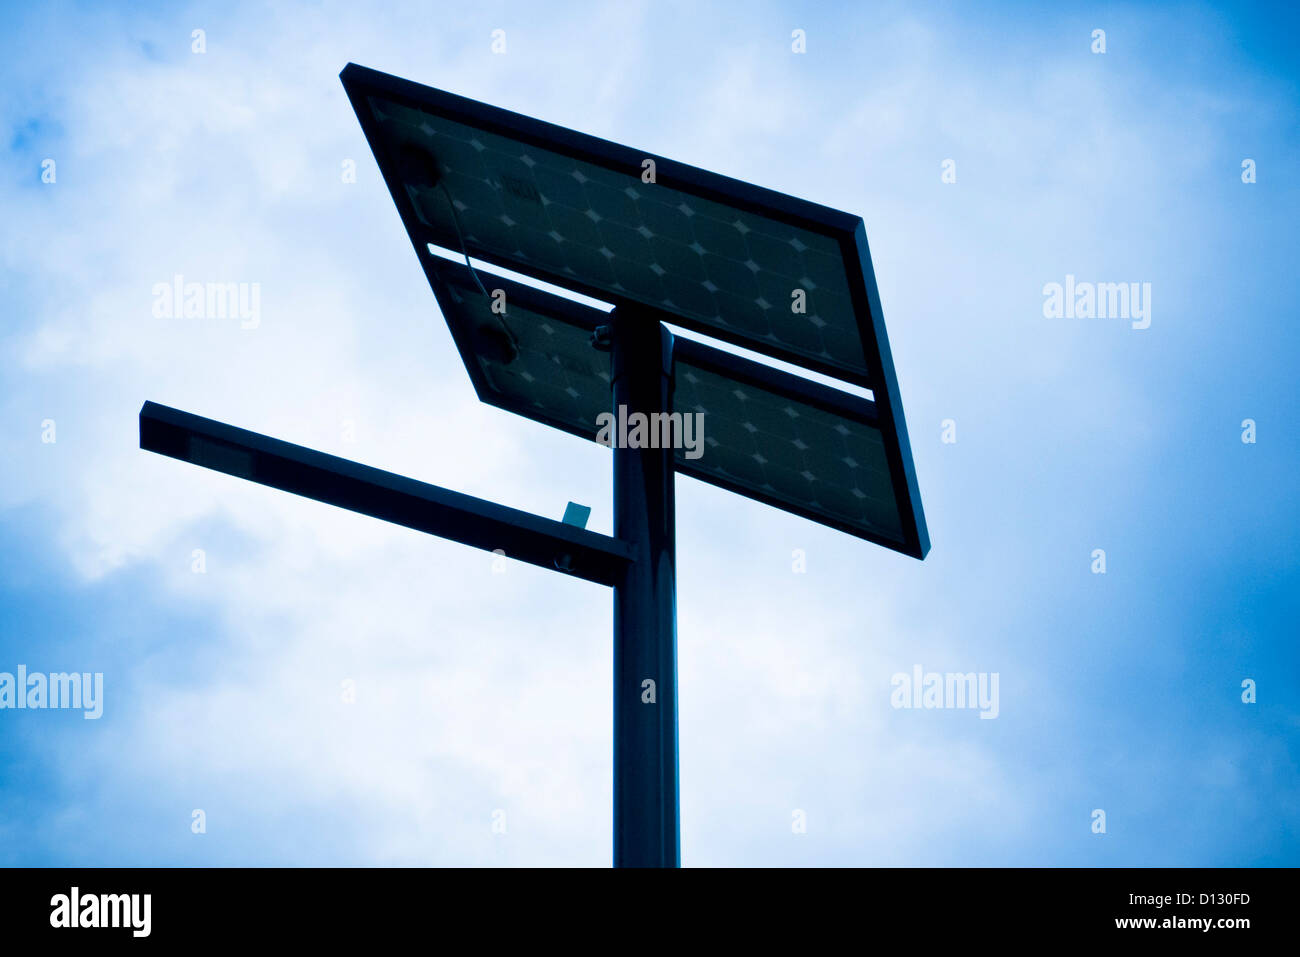 modern street lighting powered with solar energy panels Stock Photo